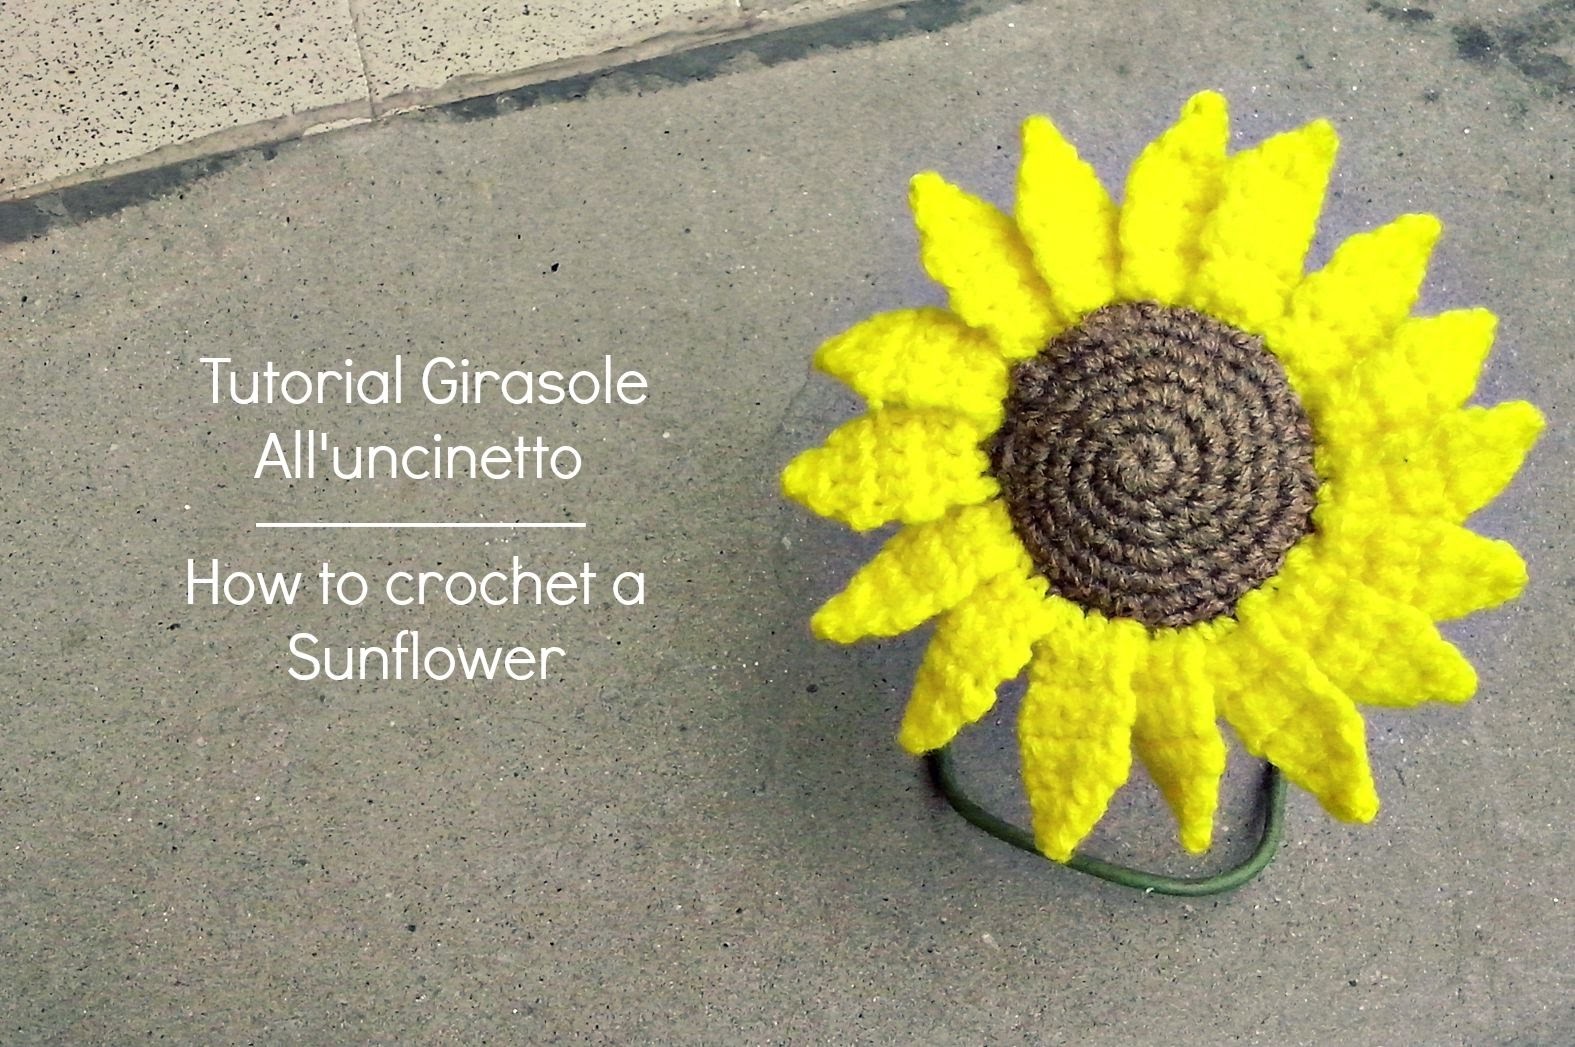 Tutorial girasole all'uncinetto | How to crochet a Sunflower